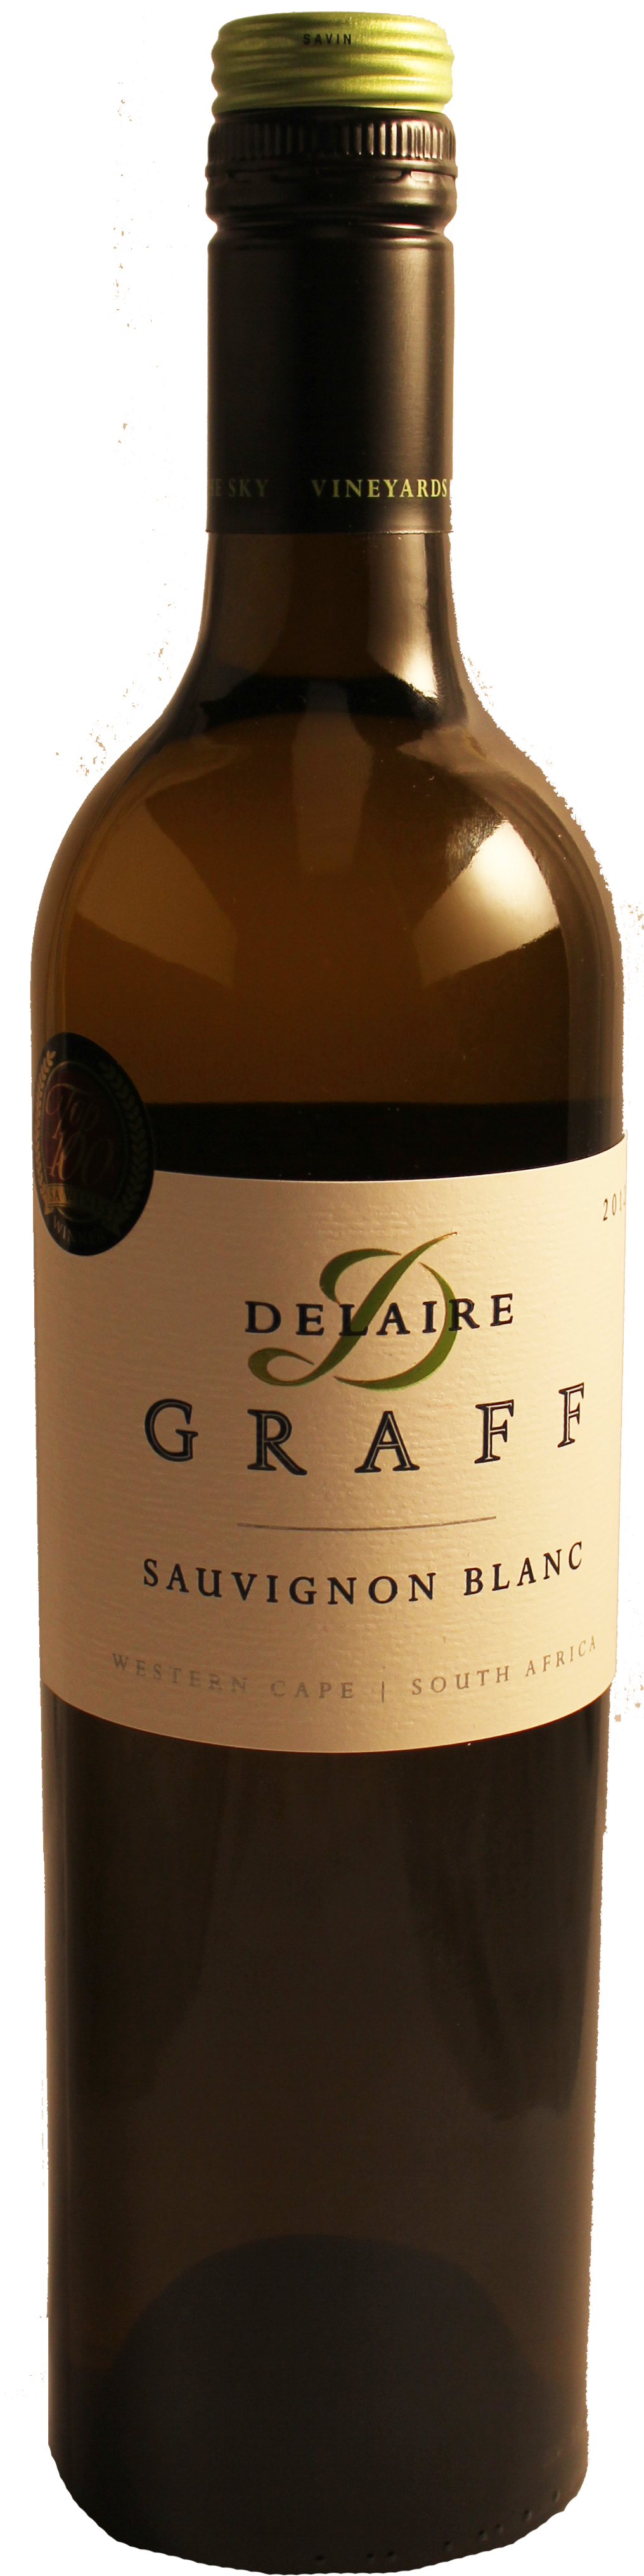 Bottle shot of 2012 Sauvignon Blanc